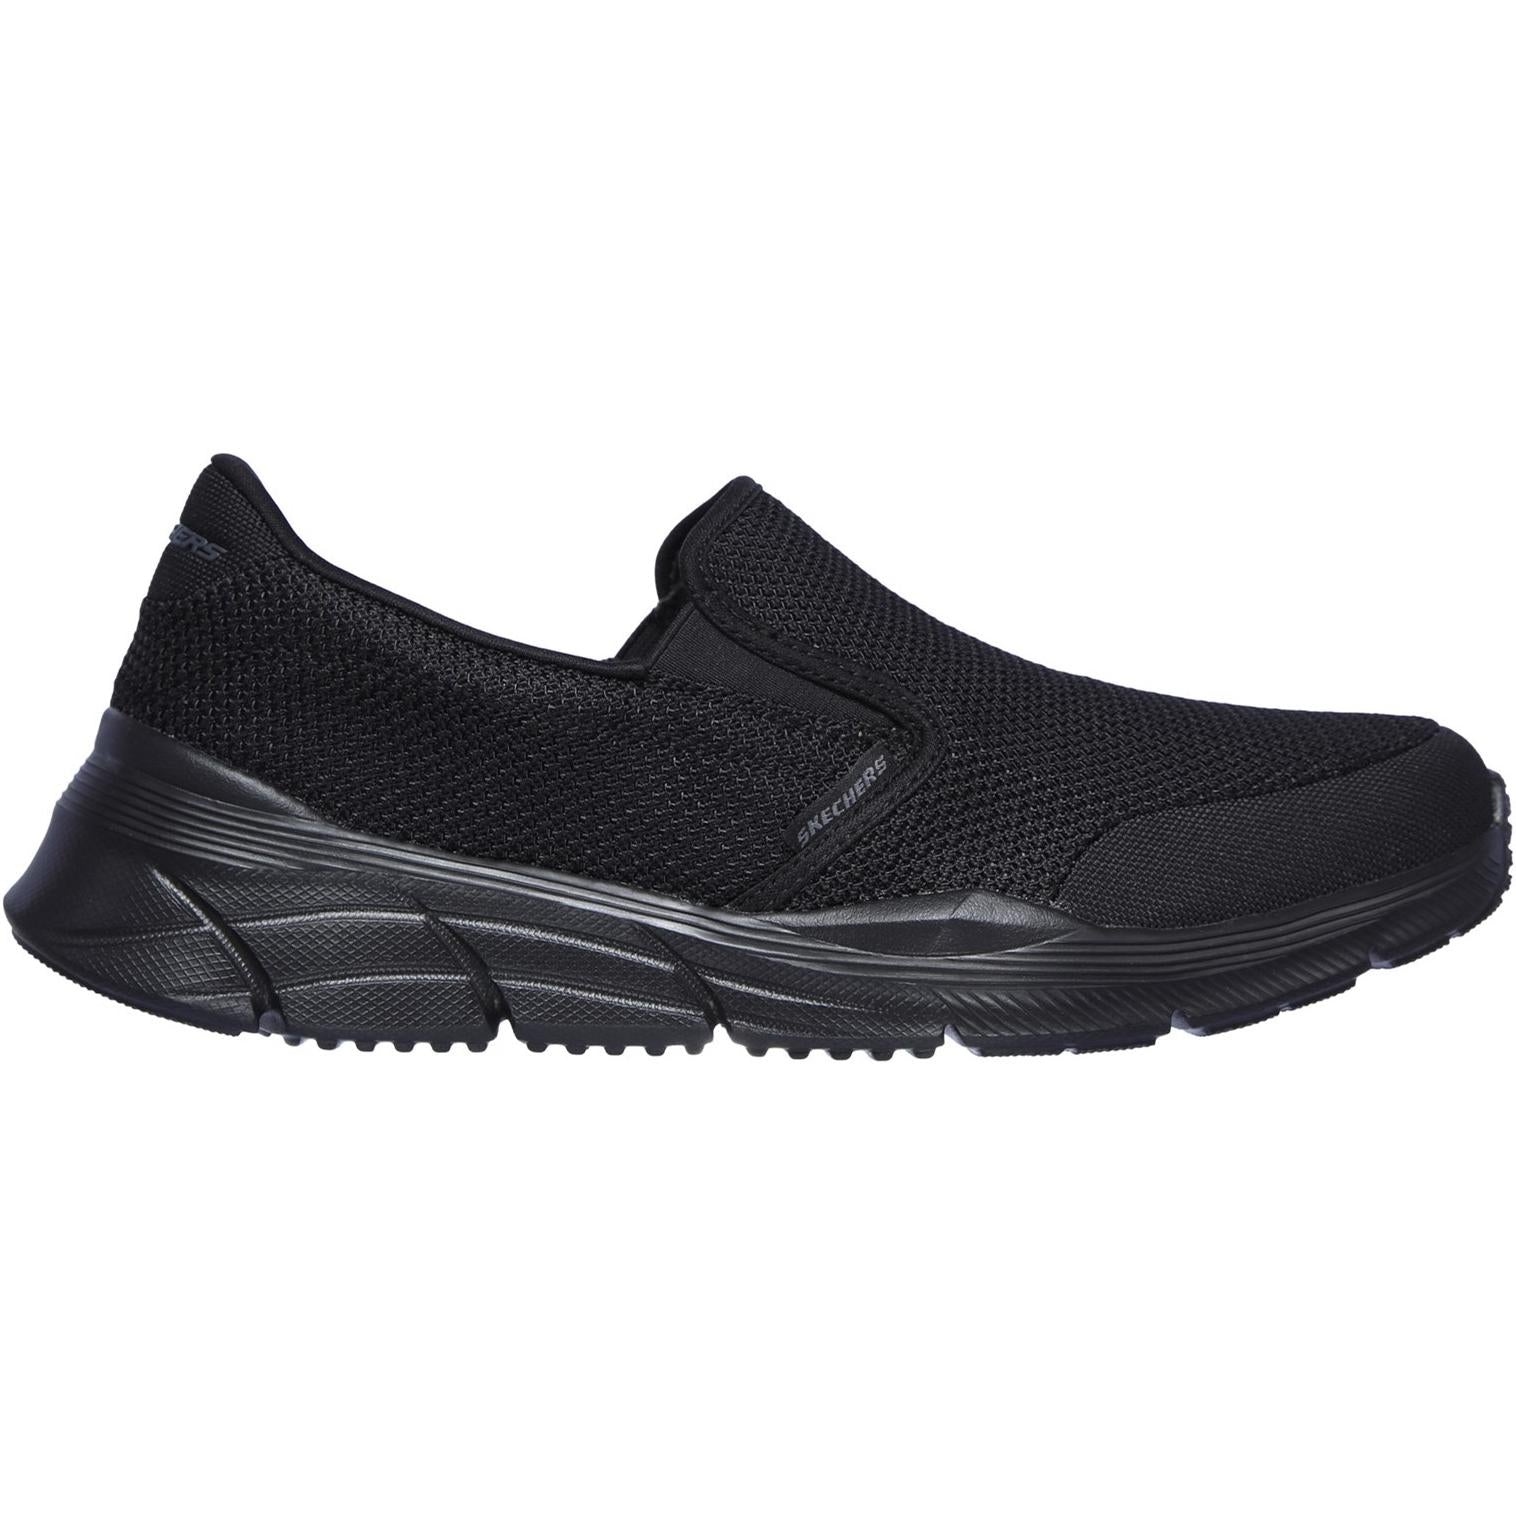 Skechers Equalizer 4.0 Krimlin Wide Sports Shoe